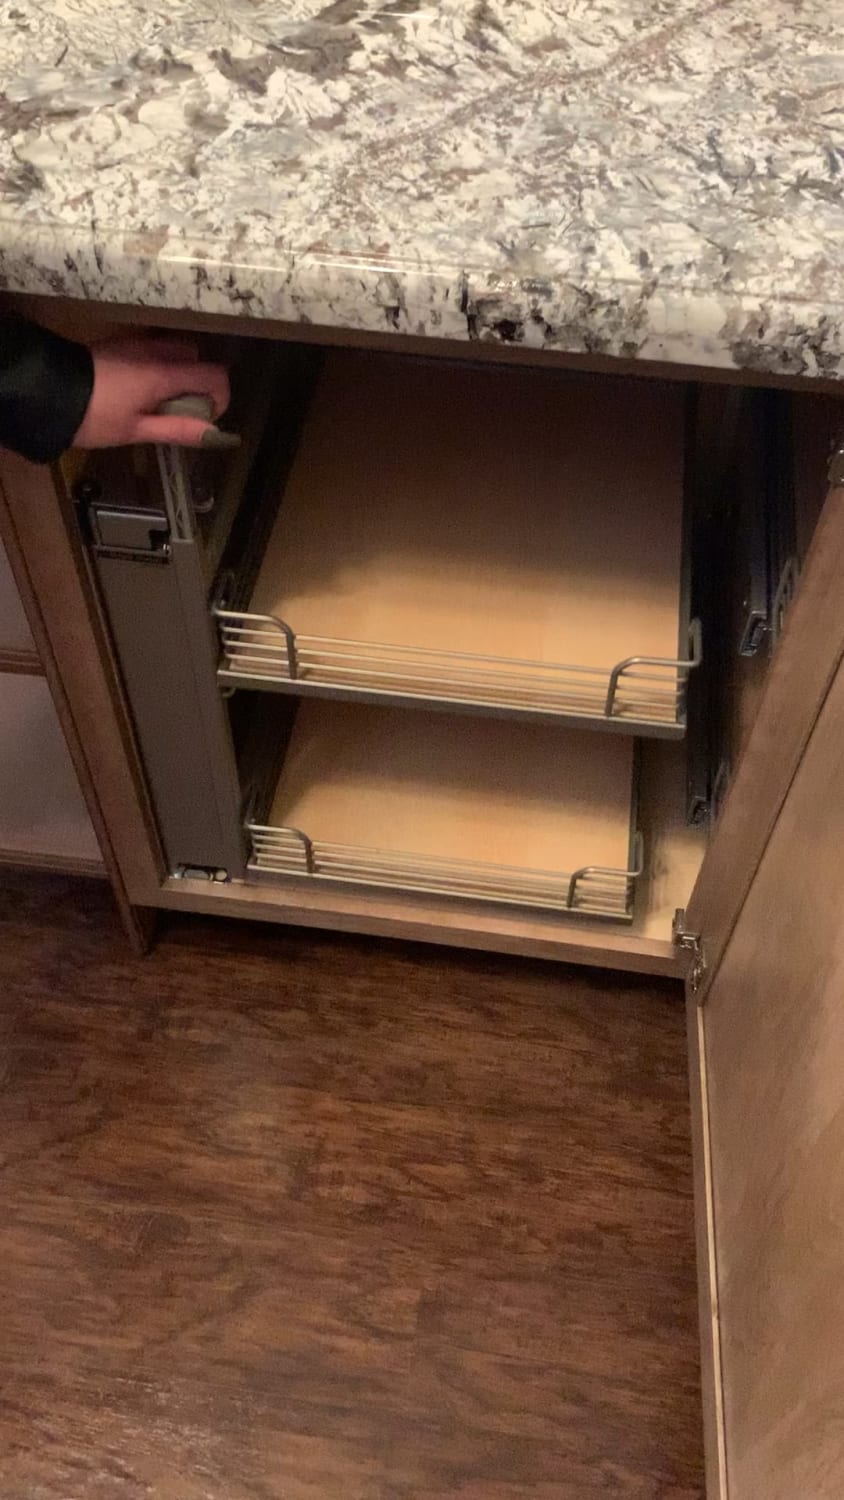 This kitchen drawer at my work